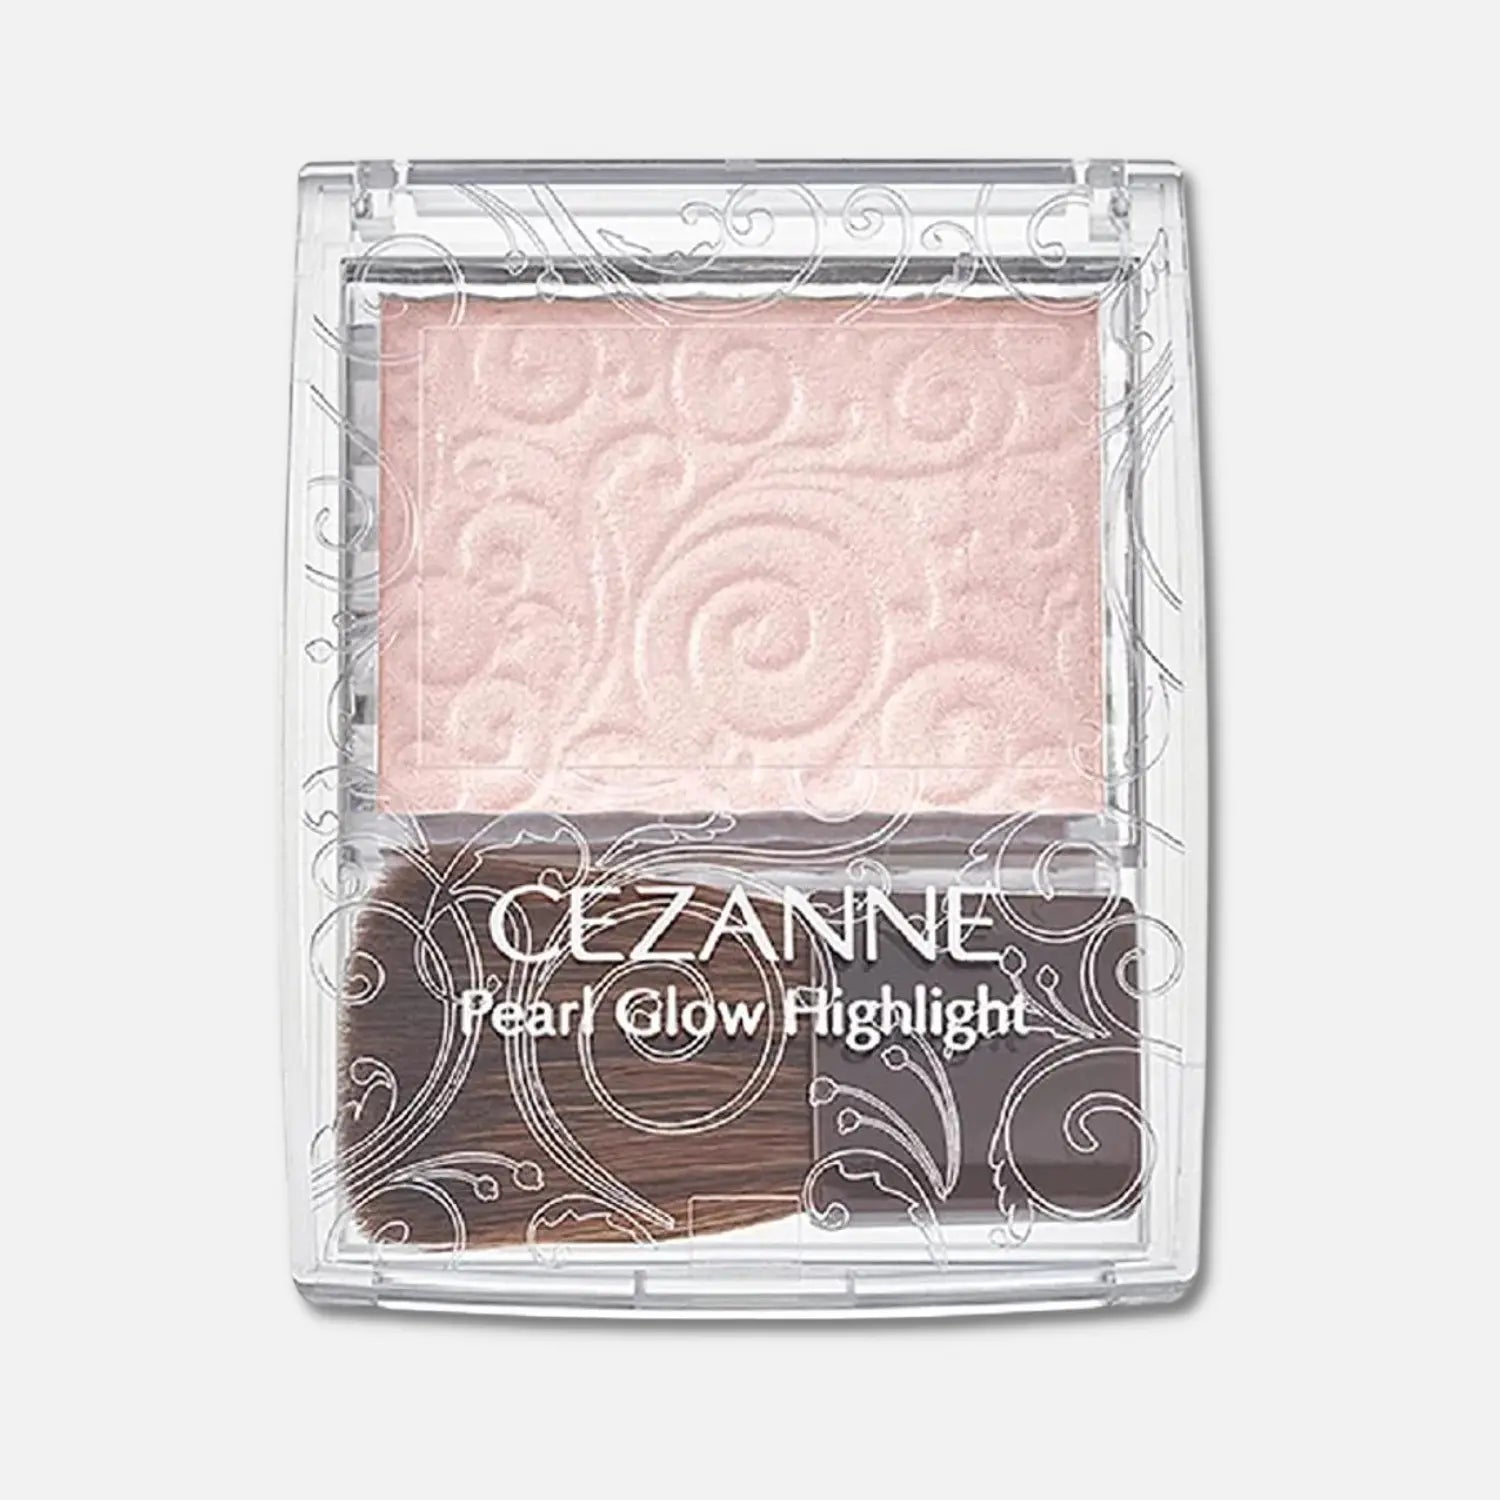 Cezanne Pearl Glow Highlight Various Shades 2.4g - Buy Me Japan